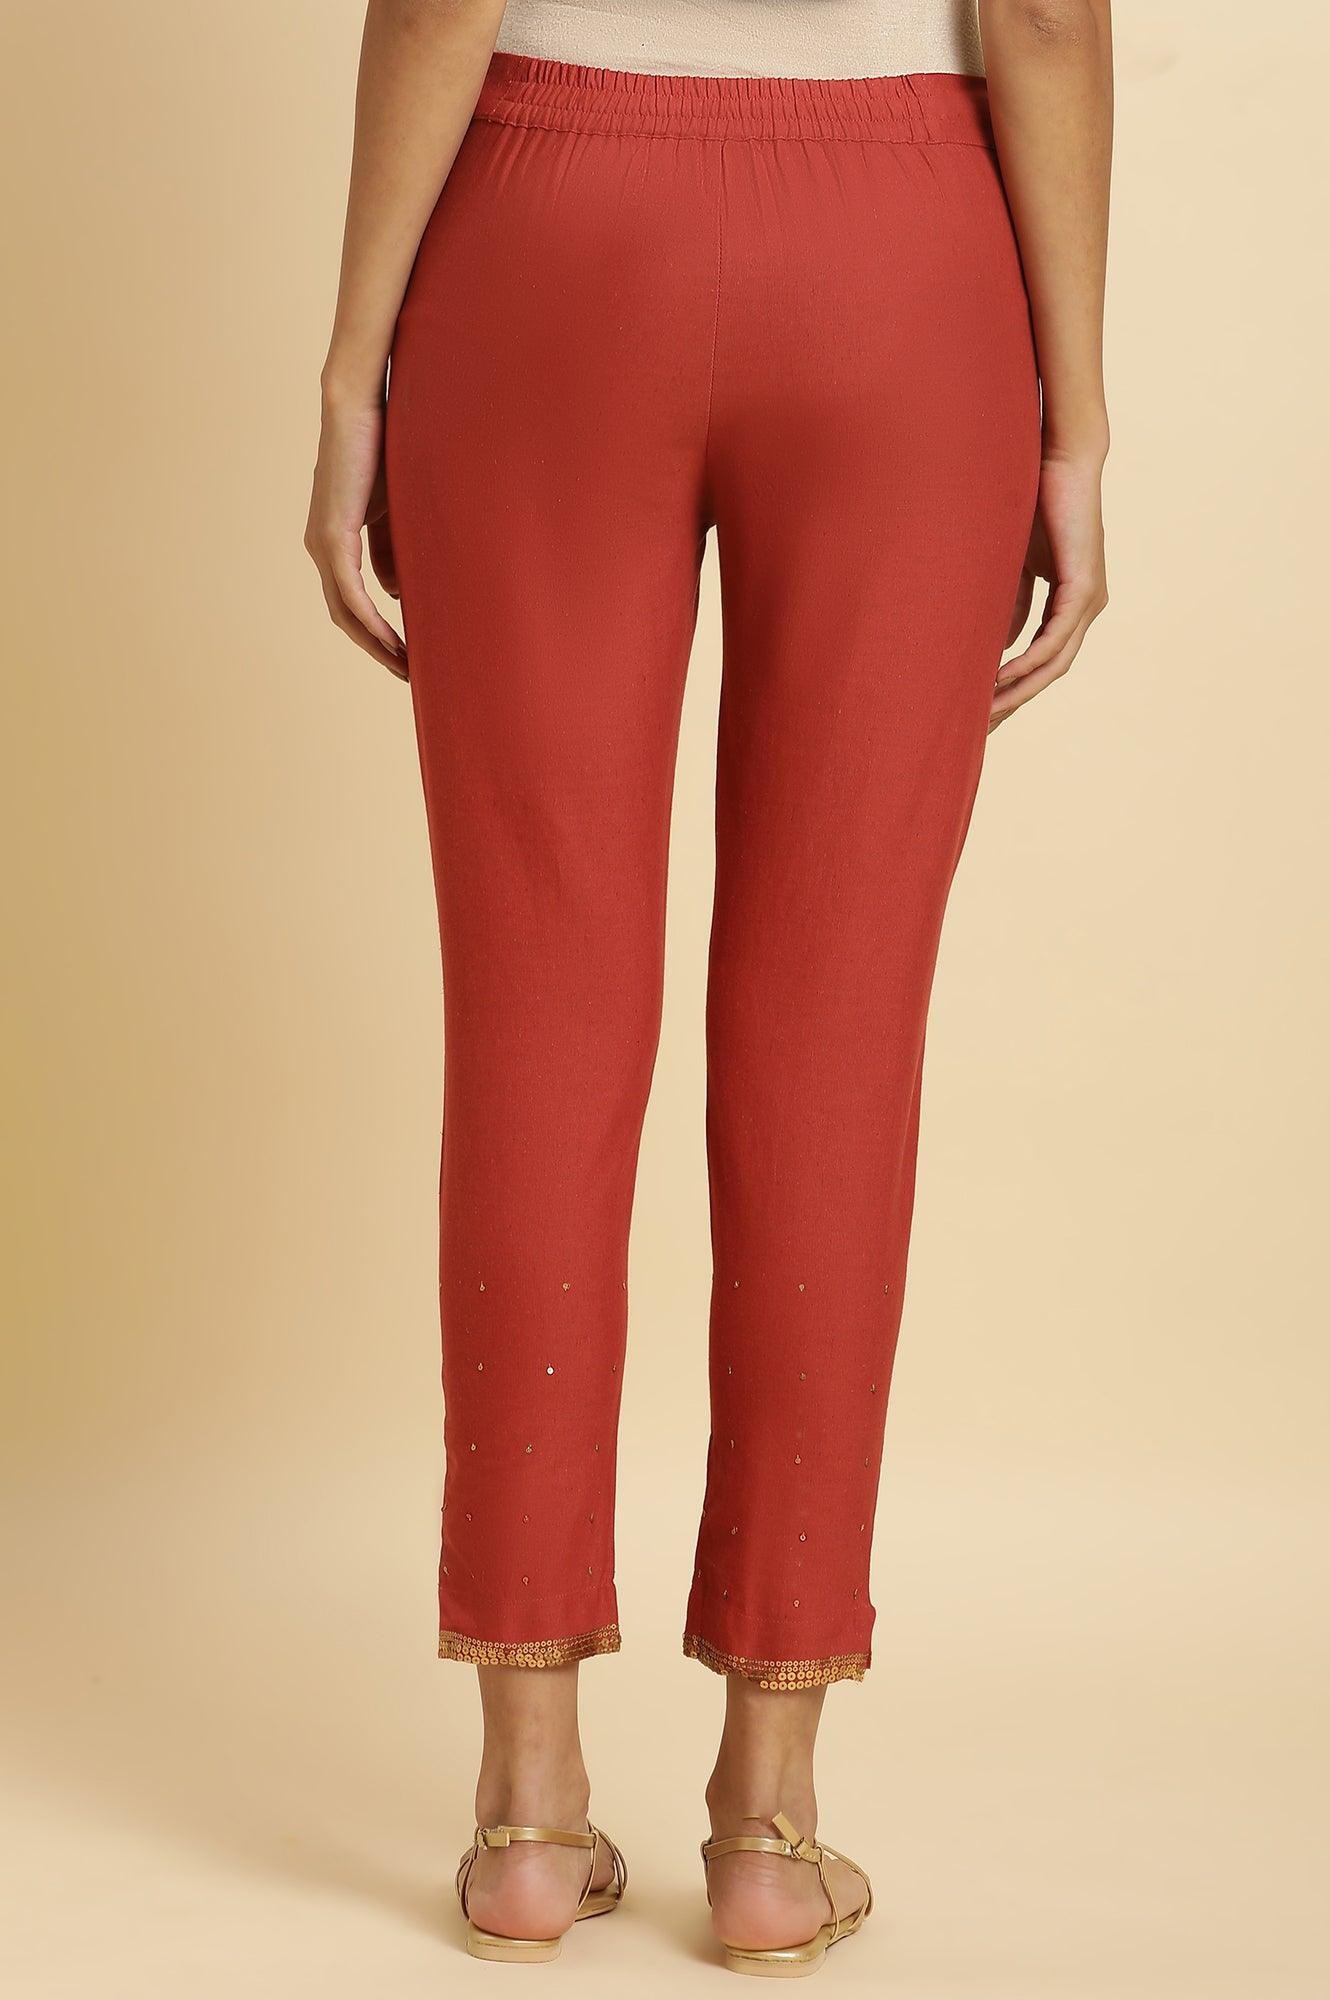 Rust Red Embellished Solid Slim Pants - wforwoman